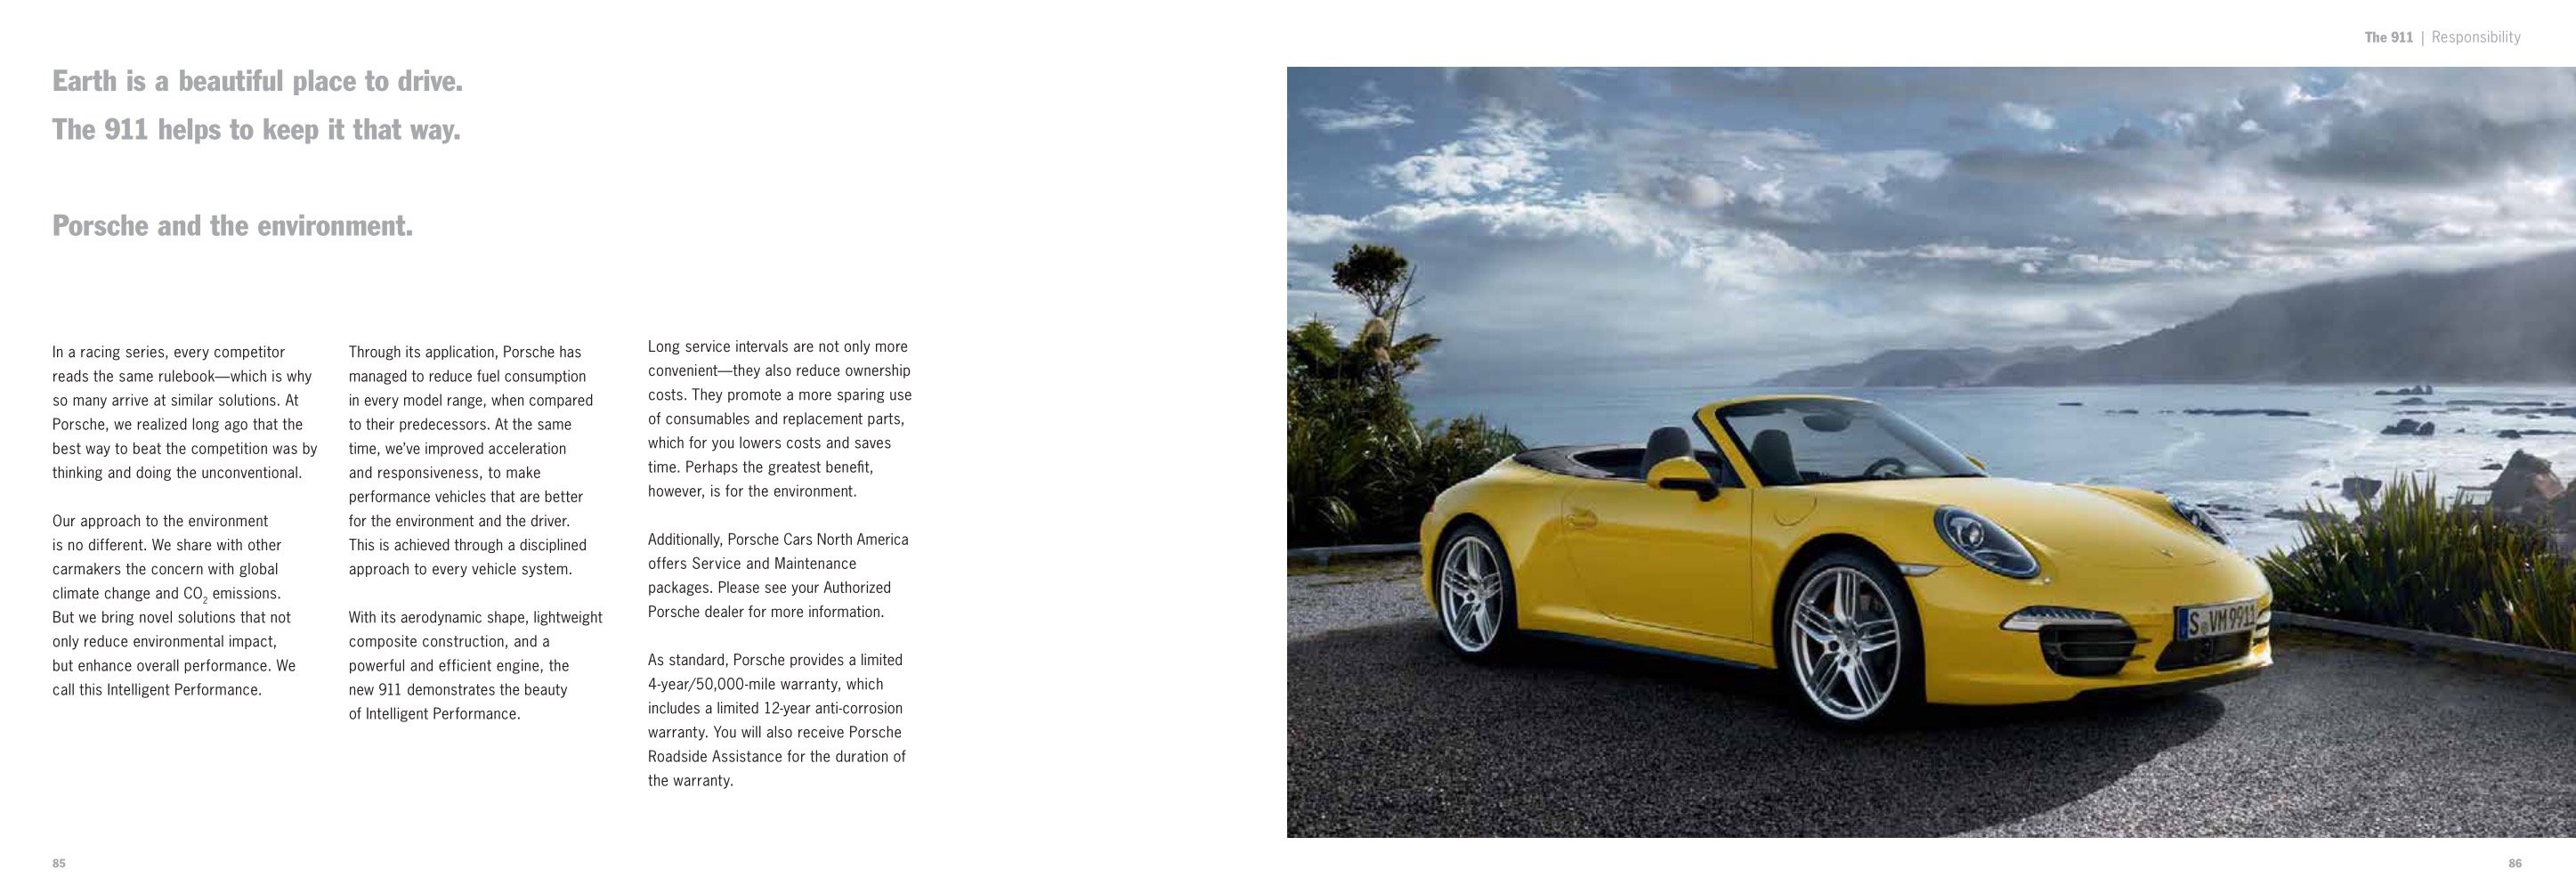 2013 Porsche 911 Brochure Page 56